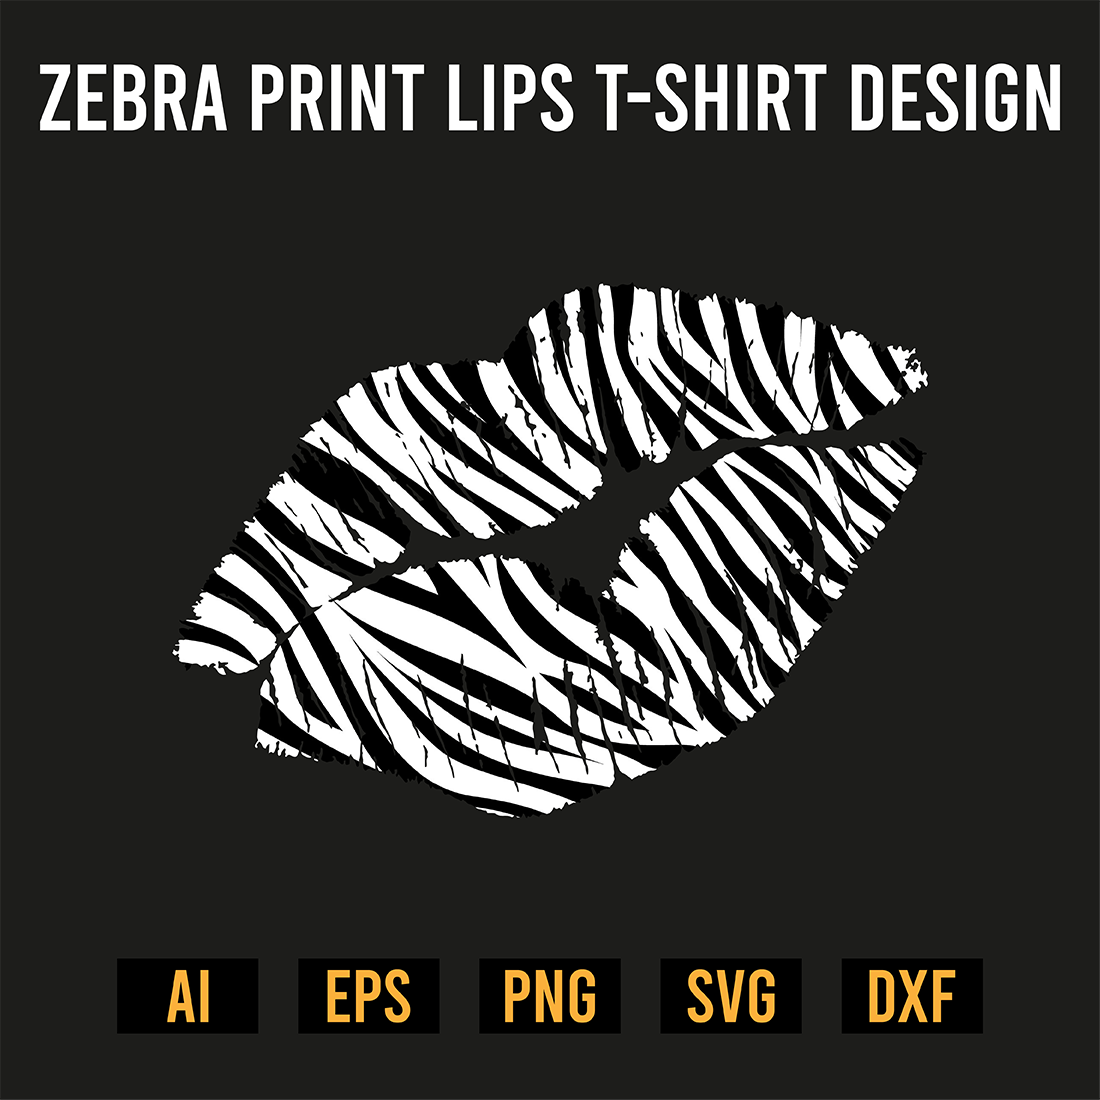 Zebra Print Lips T-Shirt Design preview image.